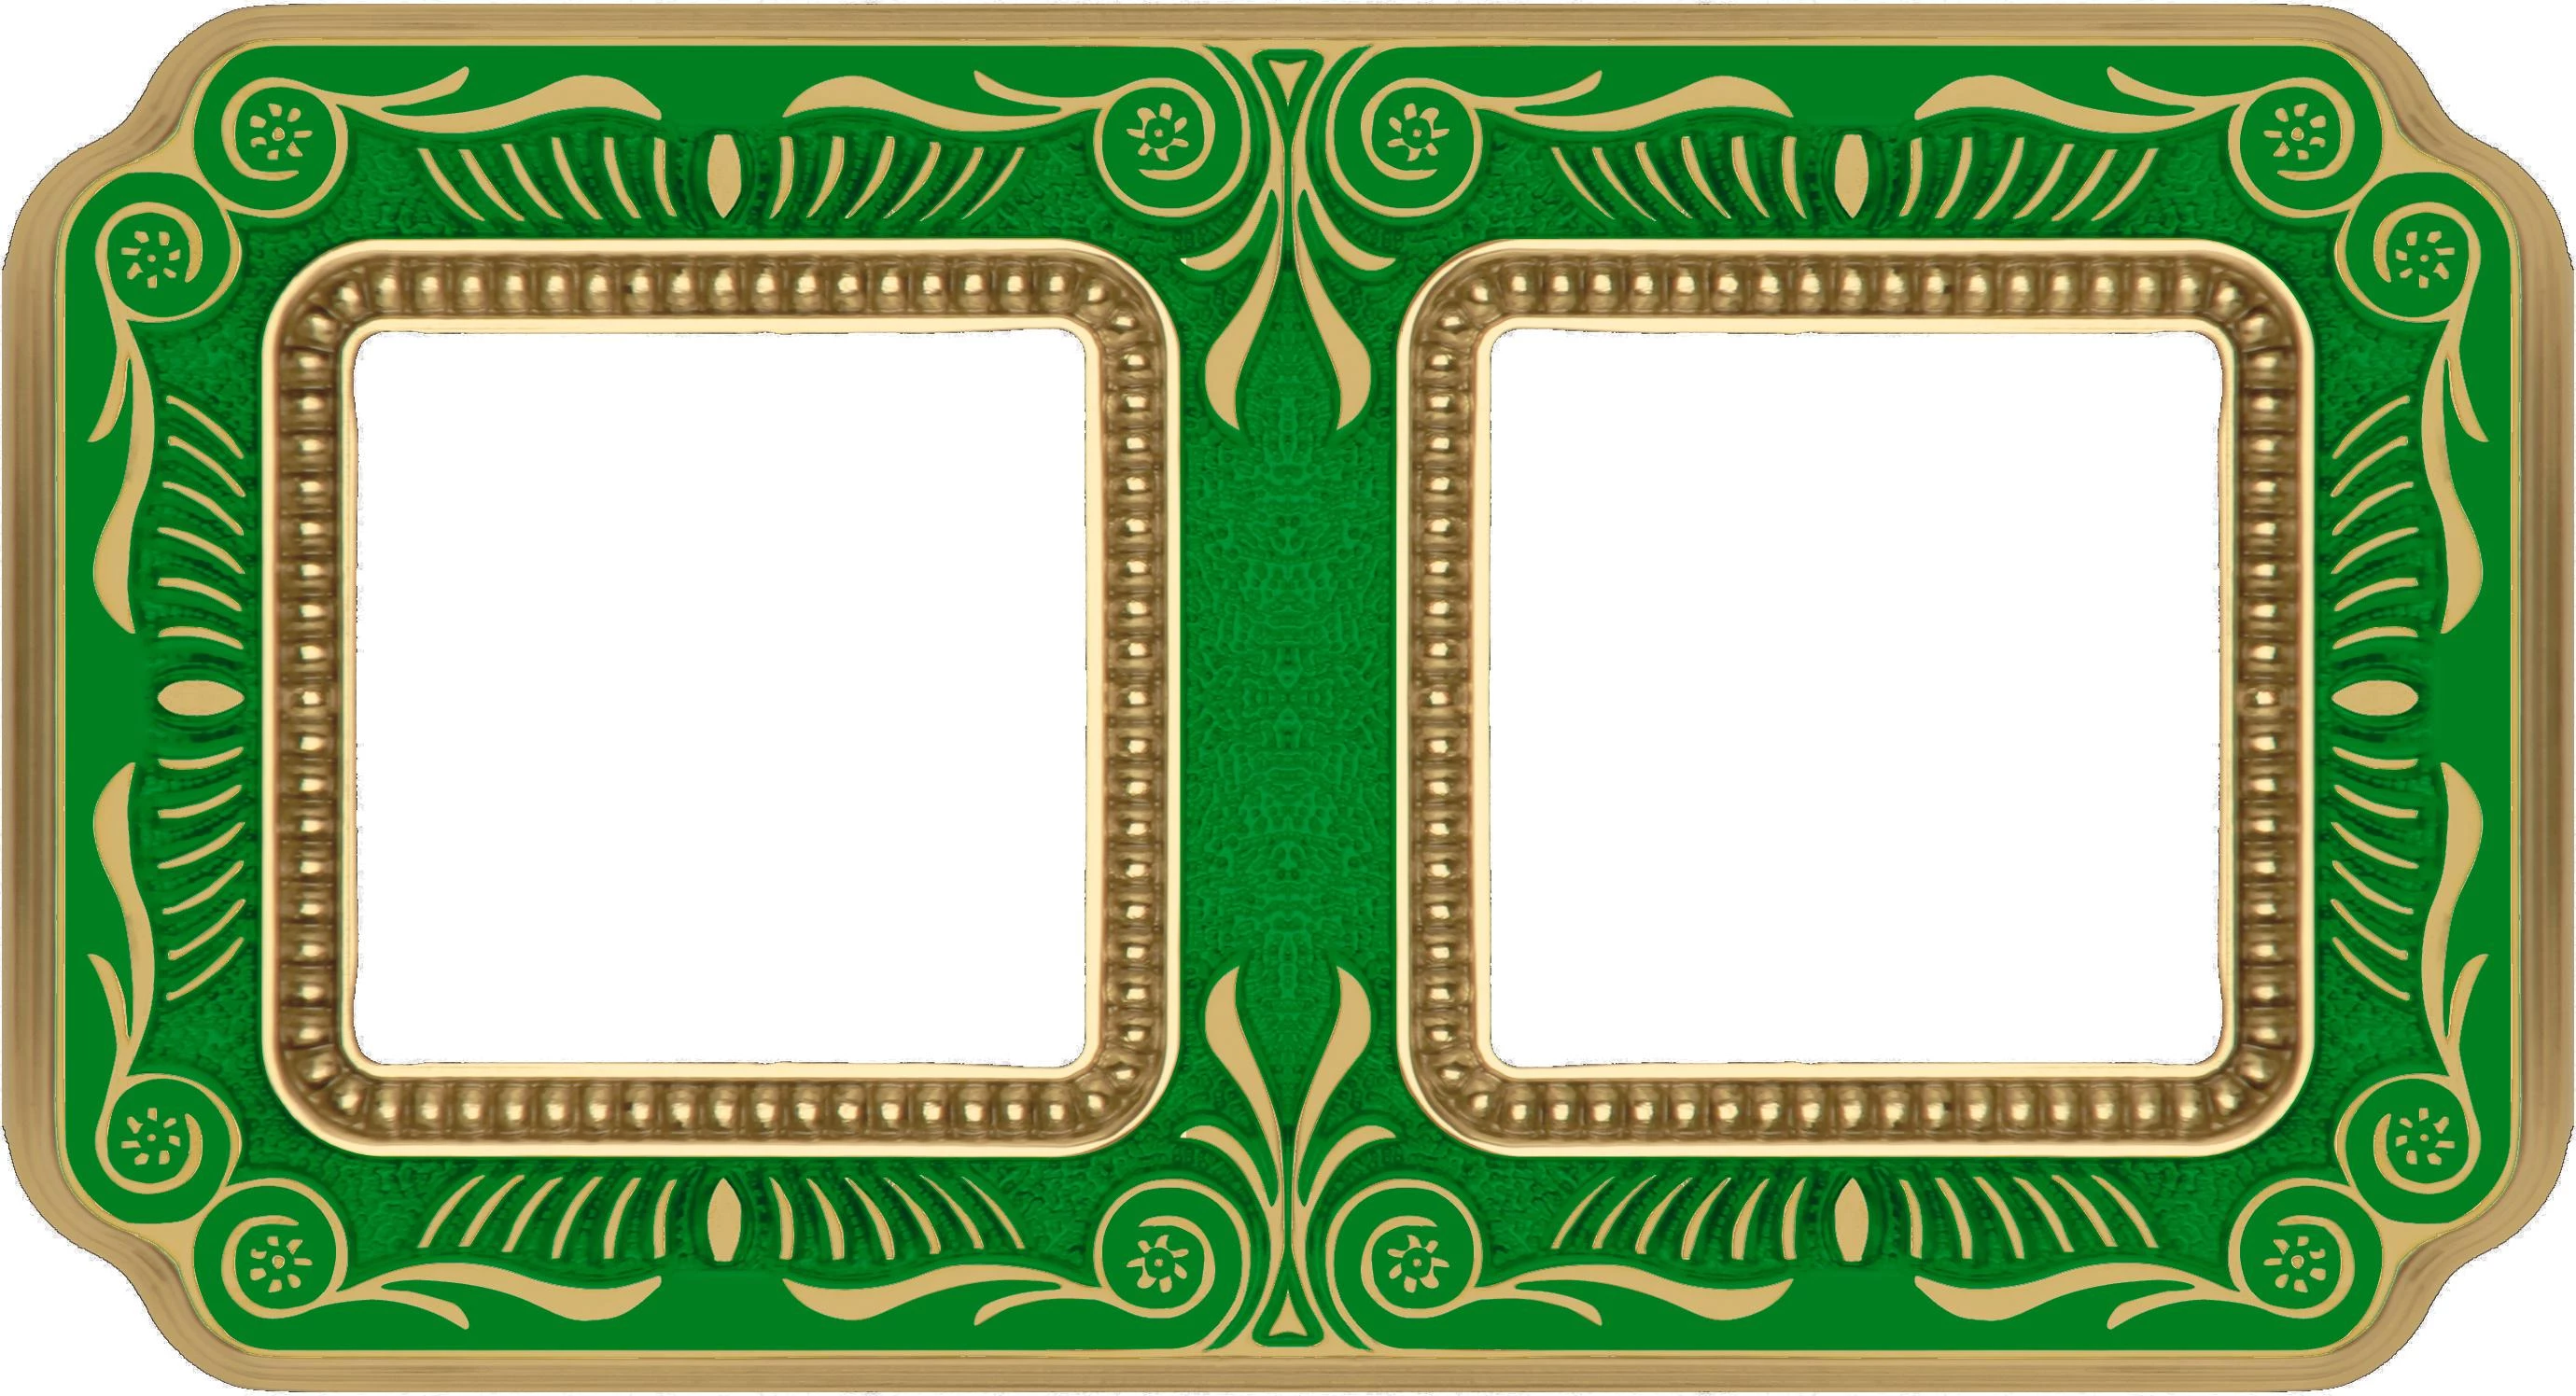  артикул FD01362VEEN название Рамка 2-ая (двойная), цвет Изумрудно-зеленый, Firenze, Fede